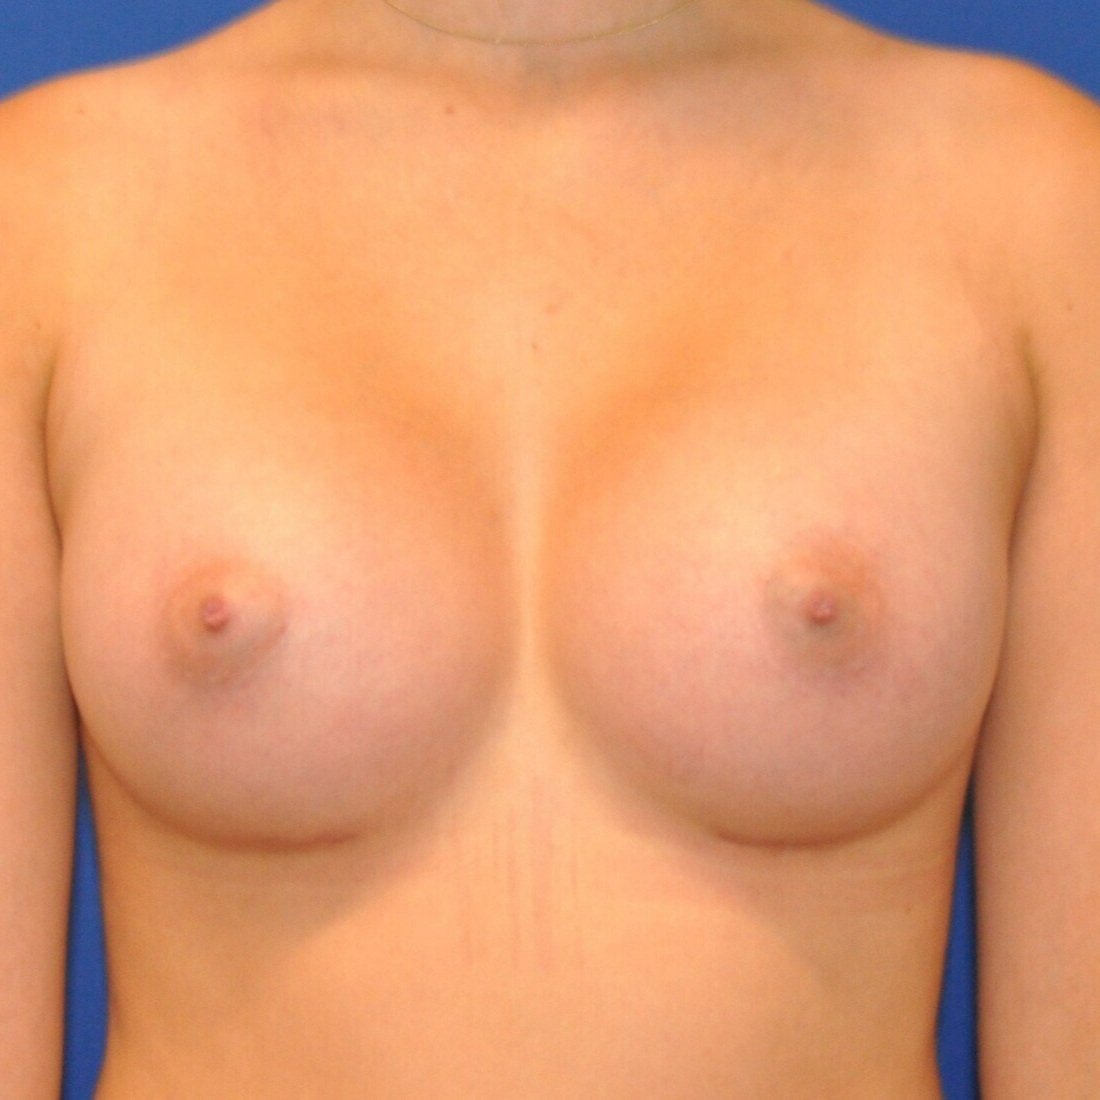 breast-anterior-09.21.2021-25377864.jpg